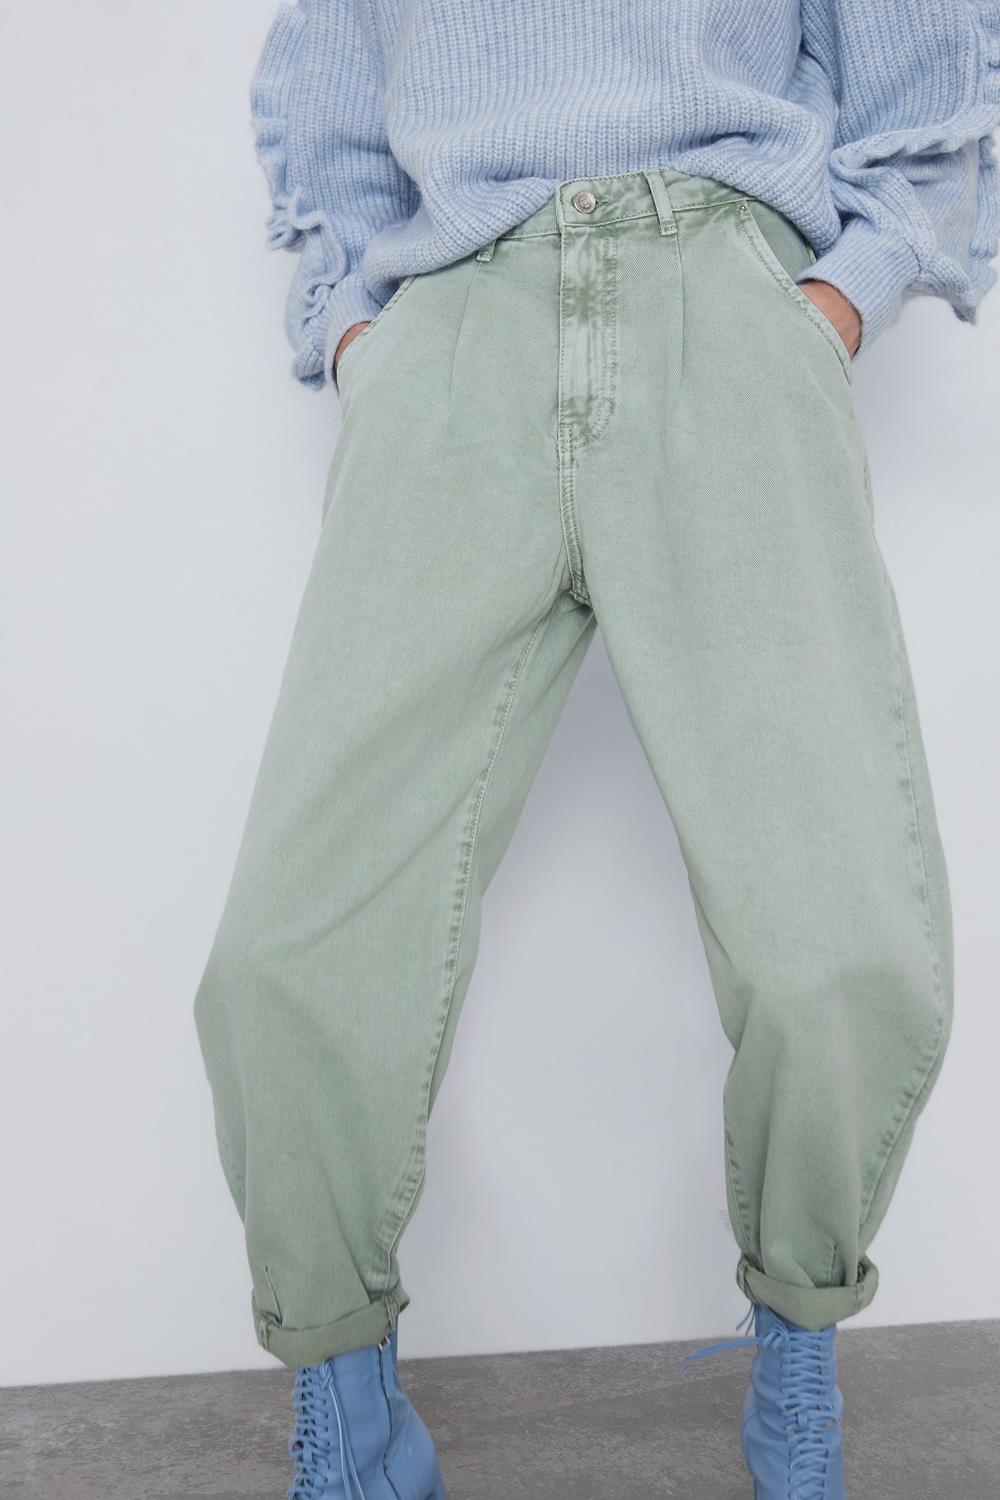 pantalón viral zara mom jeans 29,95€